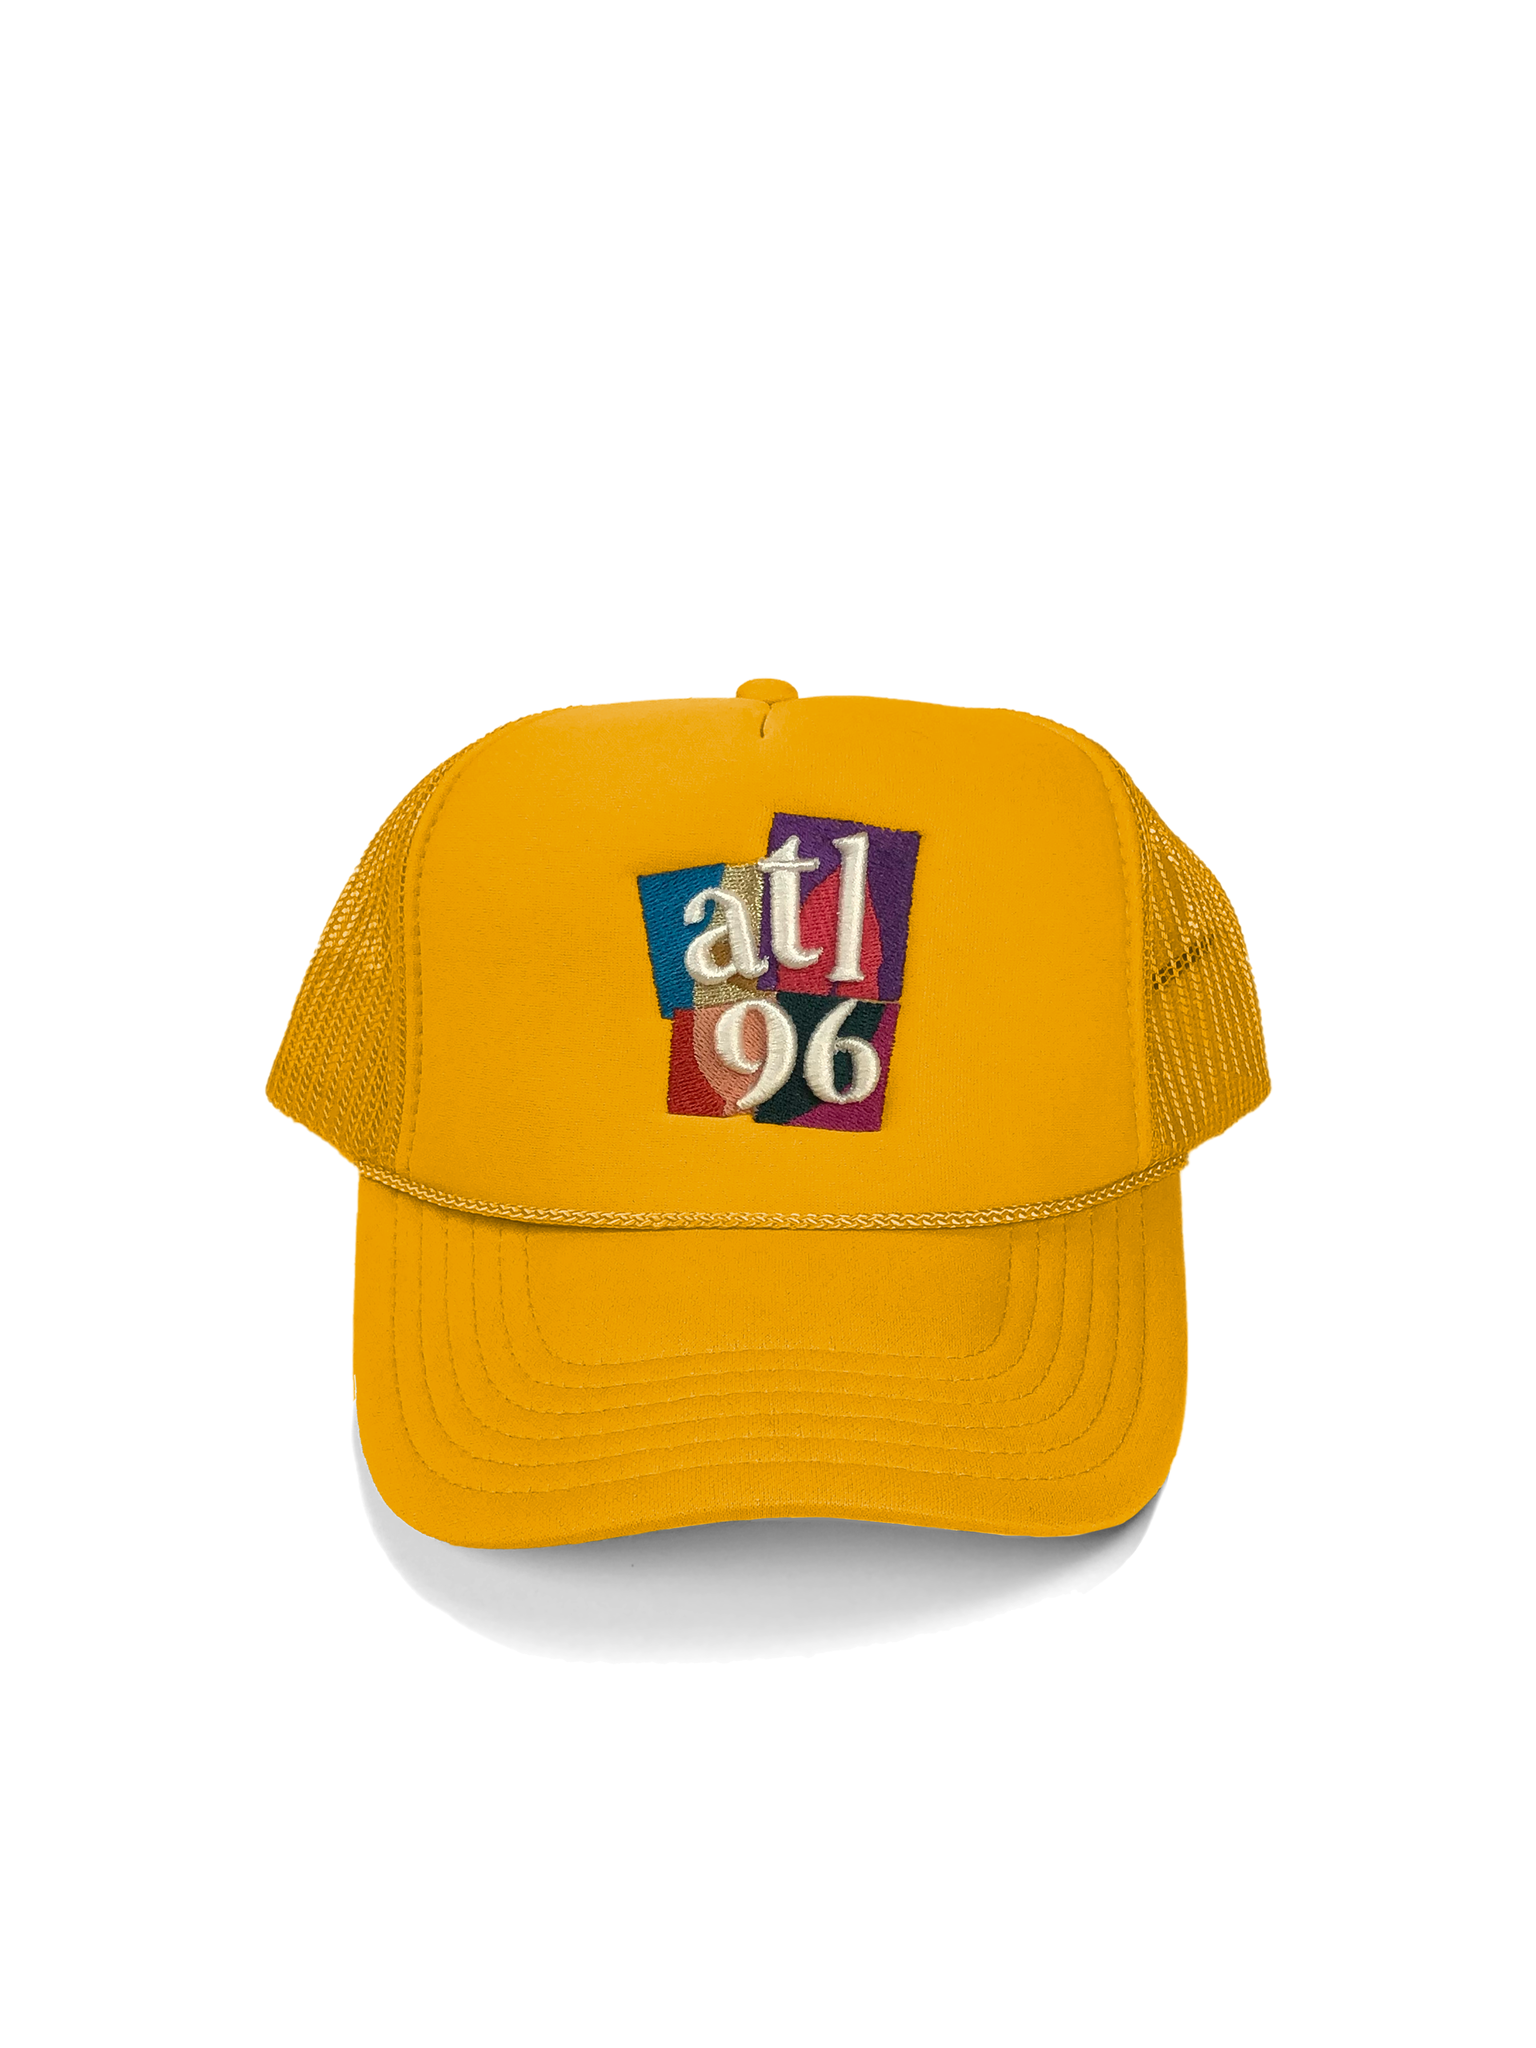 atl1996 Stacked ‘96 'Summer Daze' Trucker Hat